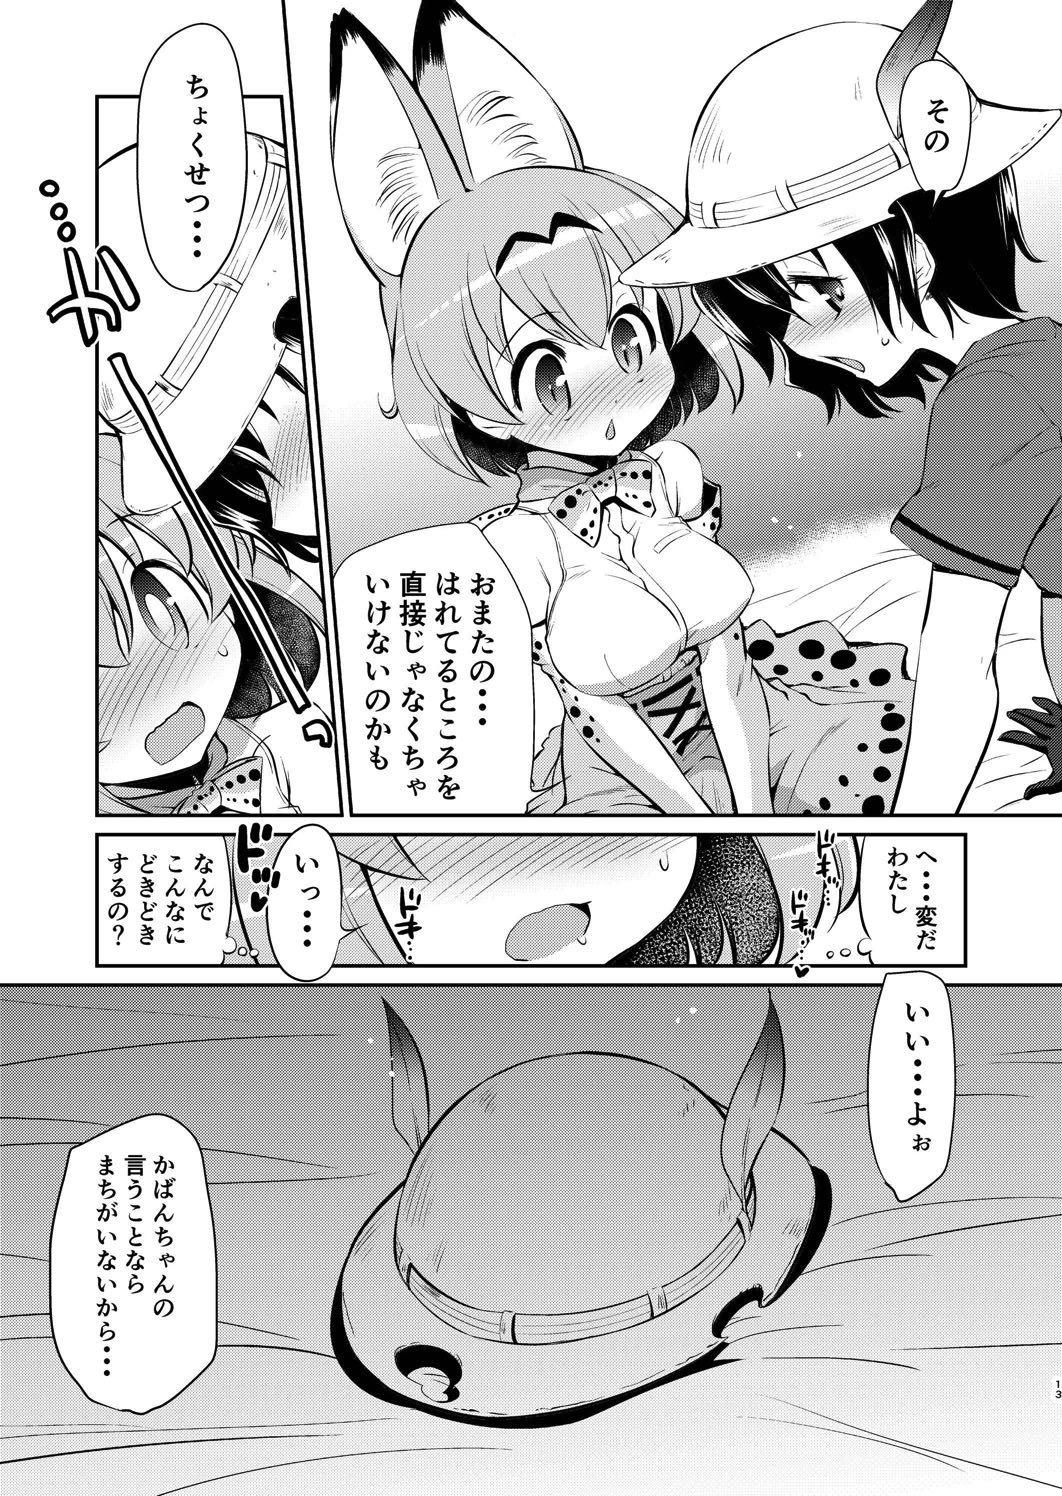 Longhair Taihen! Serval-chan no Omata ga Harechatta! - Kemono friends All - Page 12